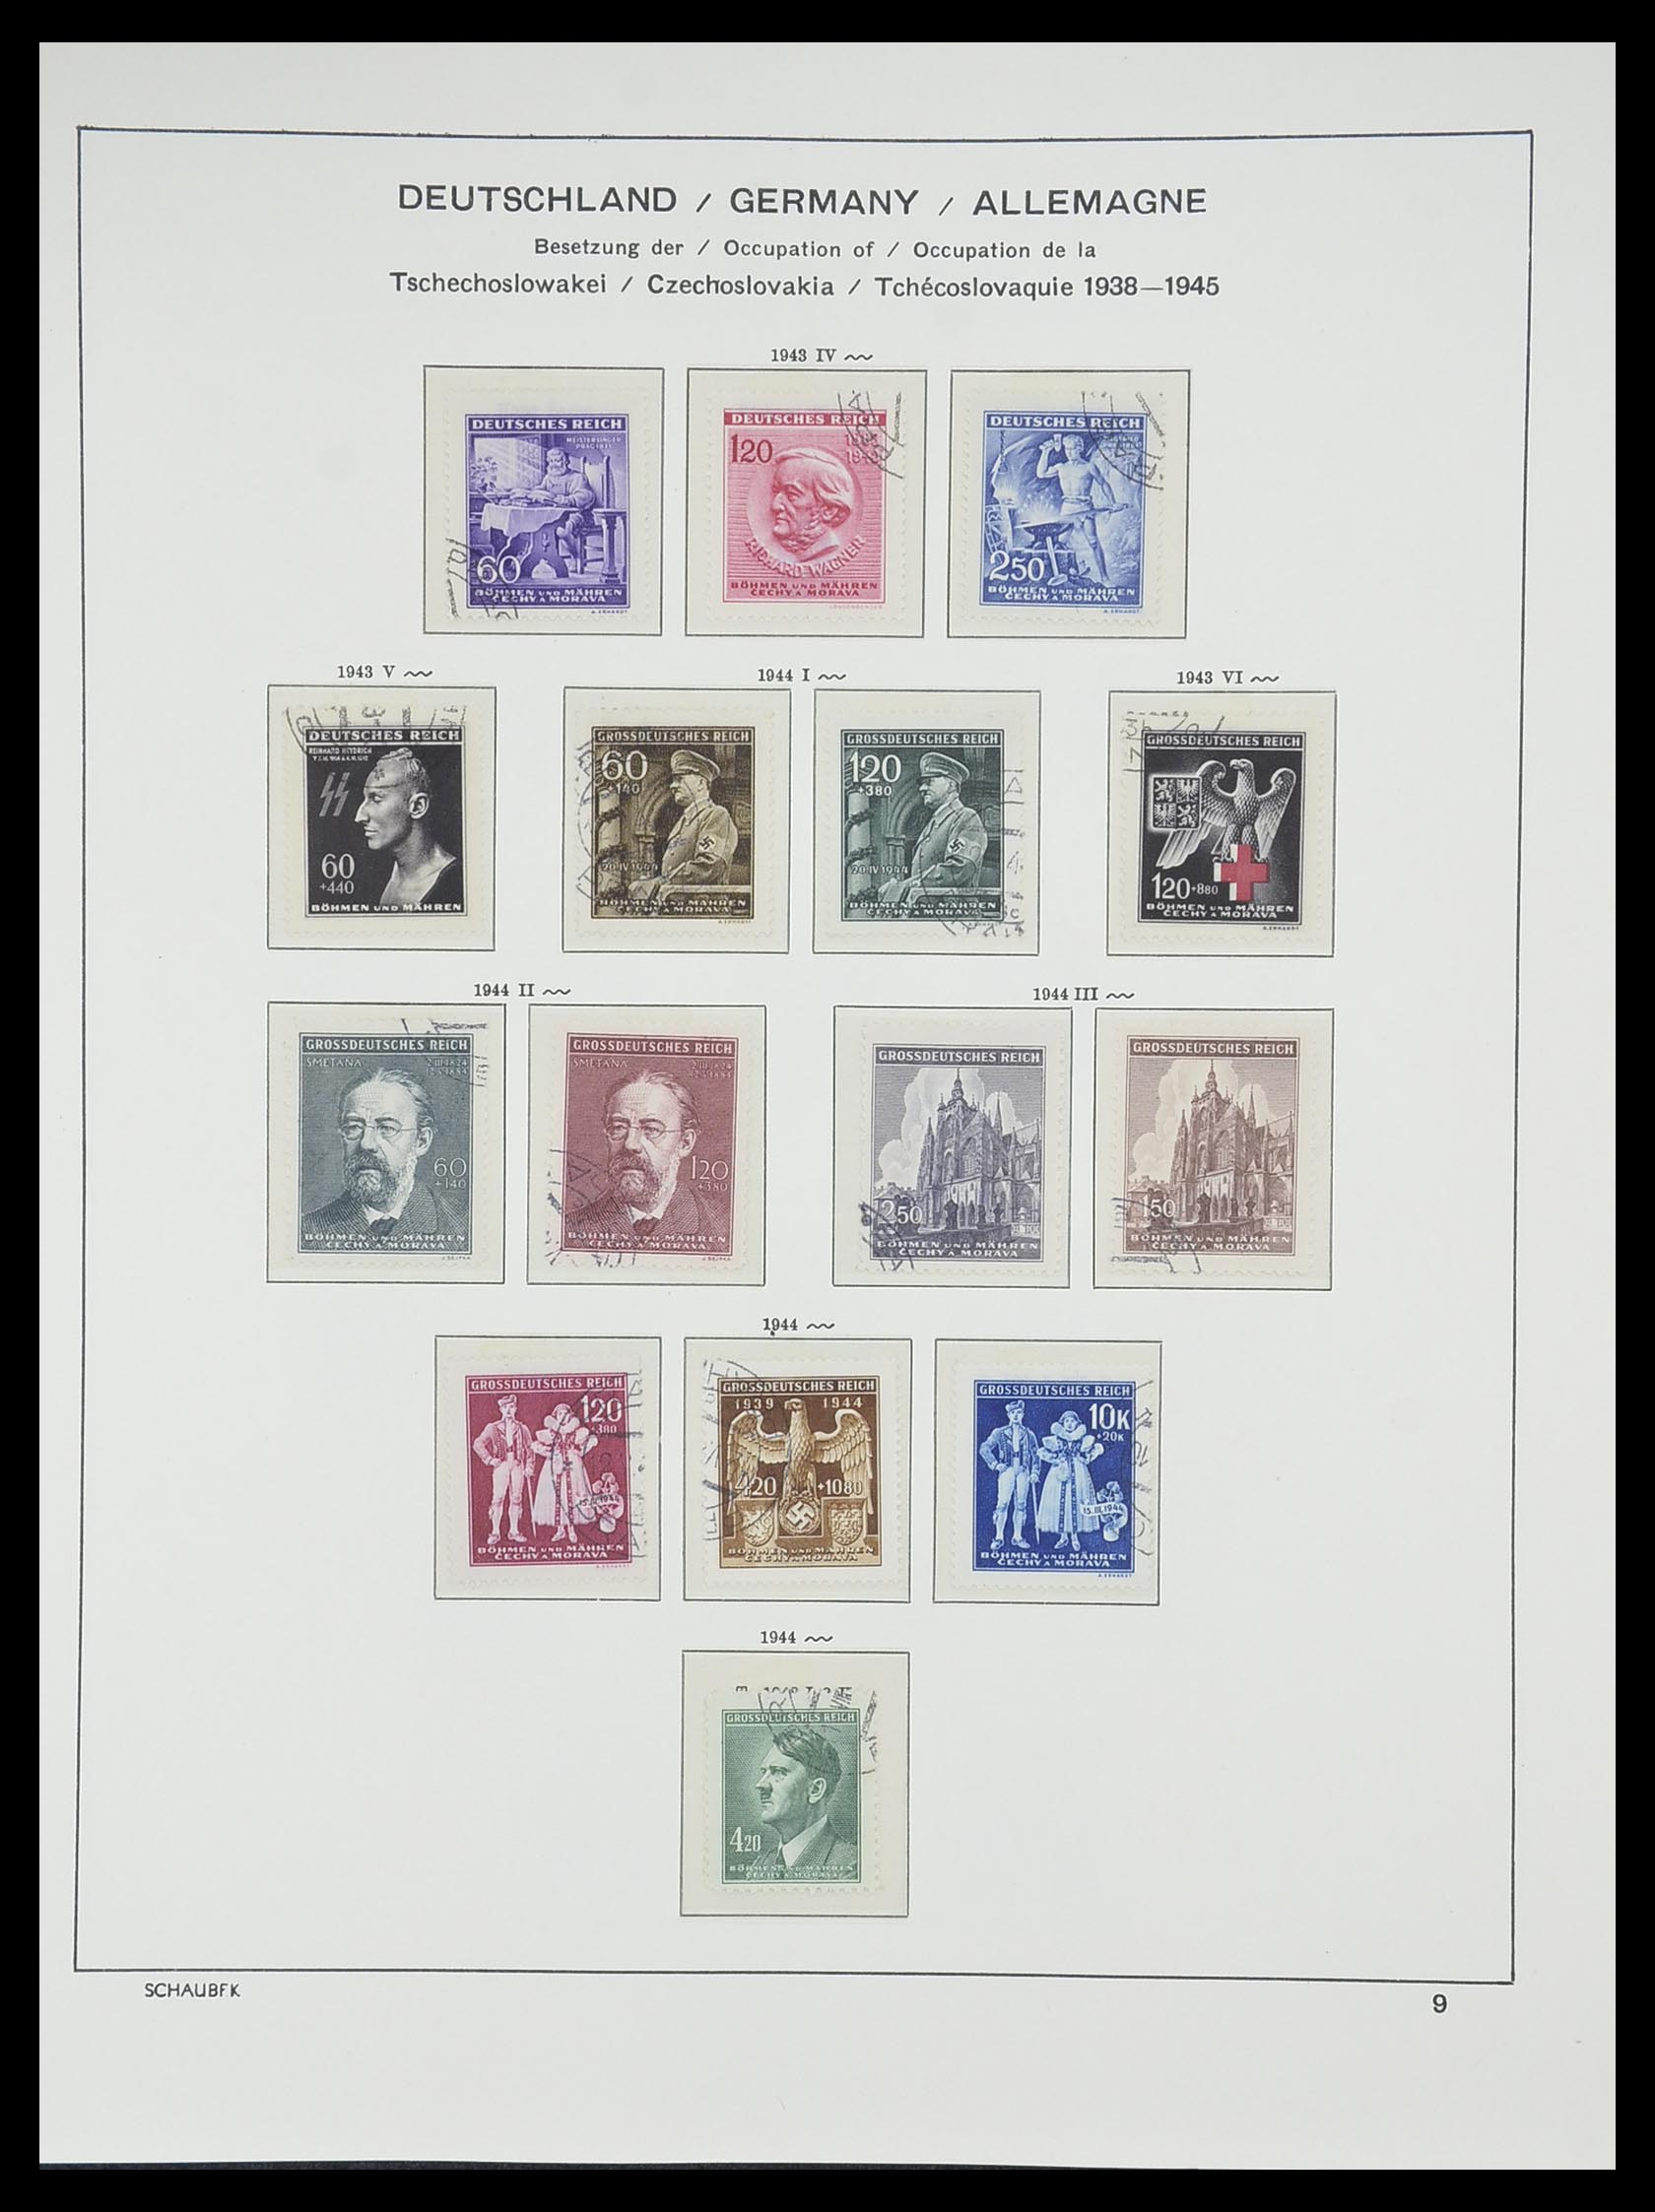 33697 102 - Stamp collection 33697 German Reich 1872-1945.